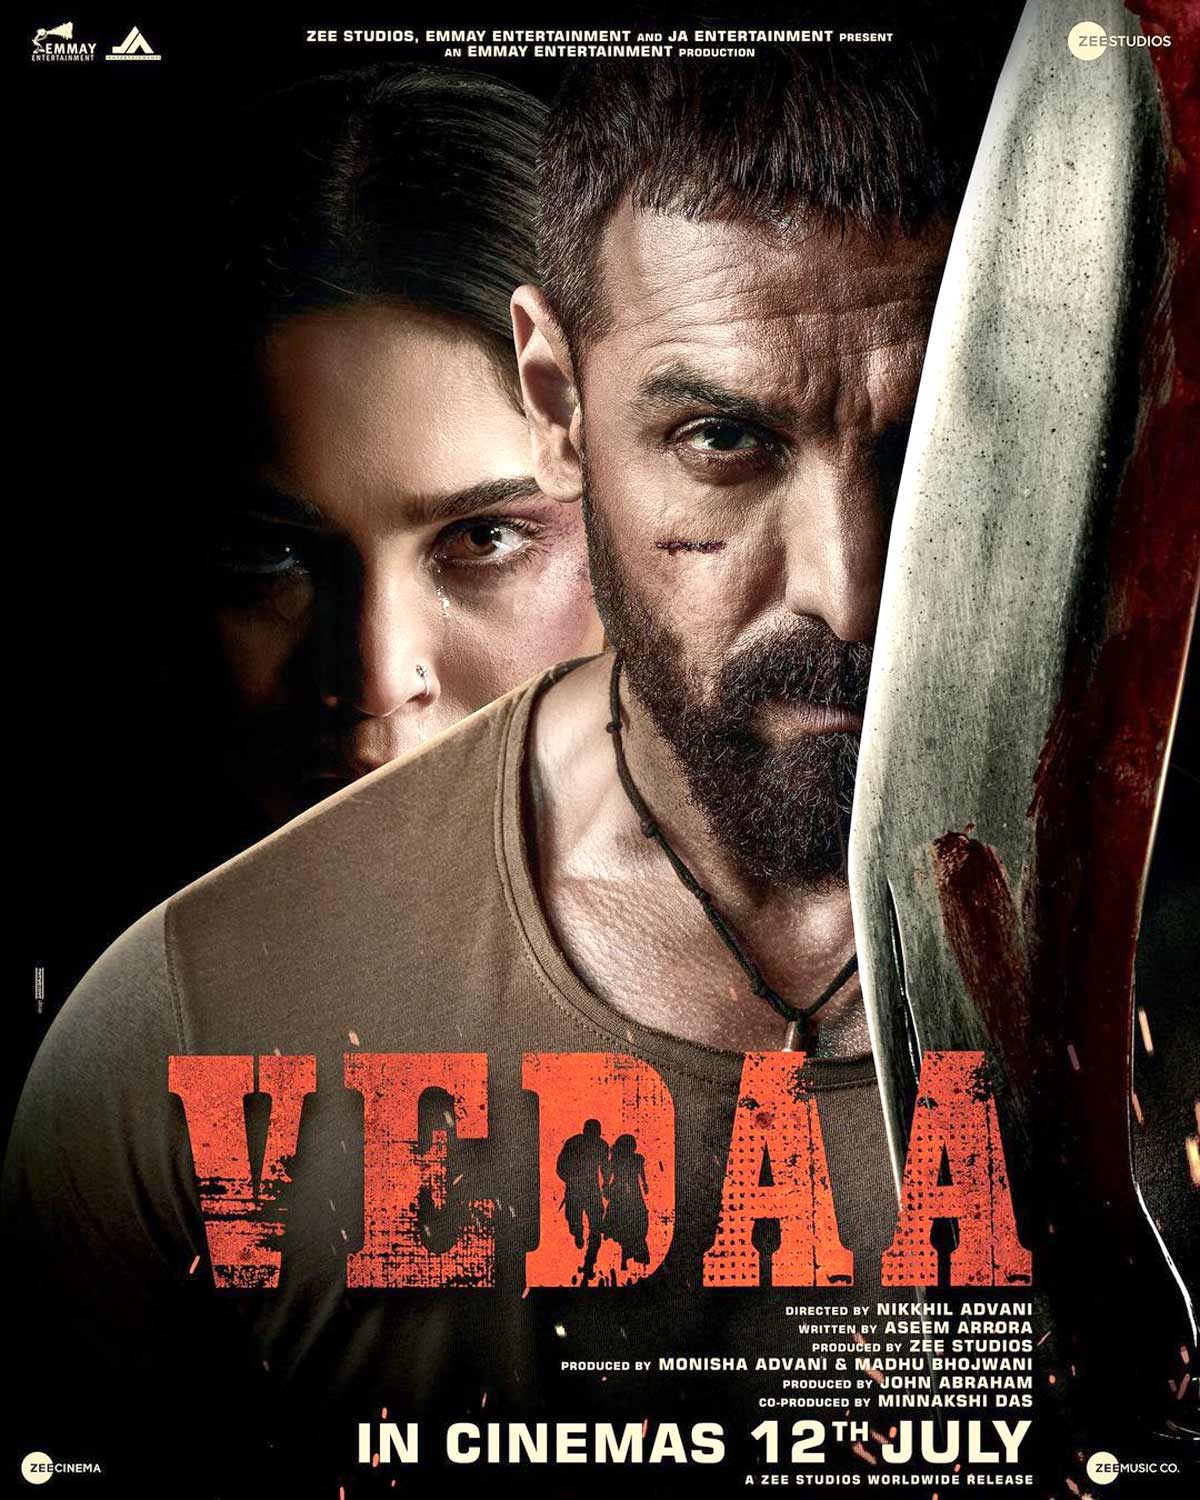 Ready For John-Sharvari’s Vedaa? – Rediff.com movies